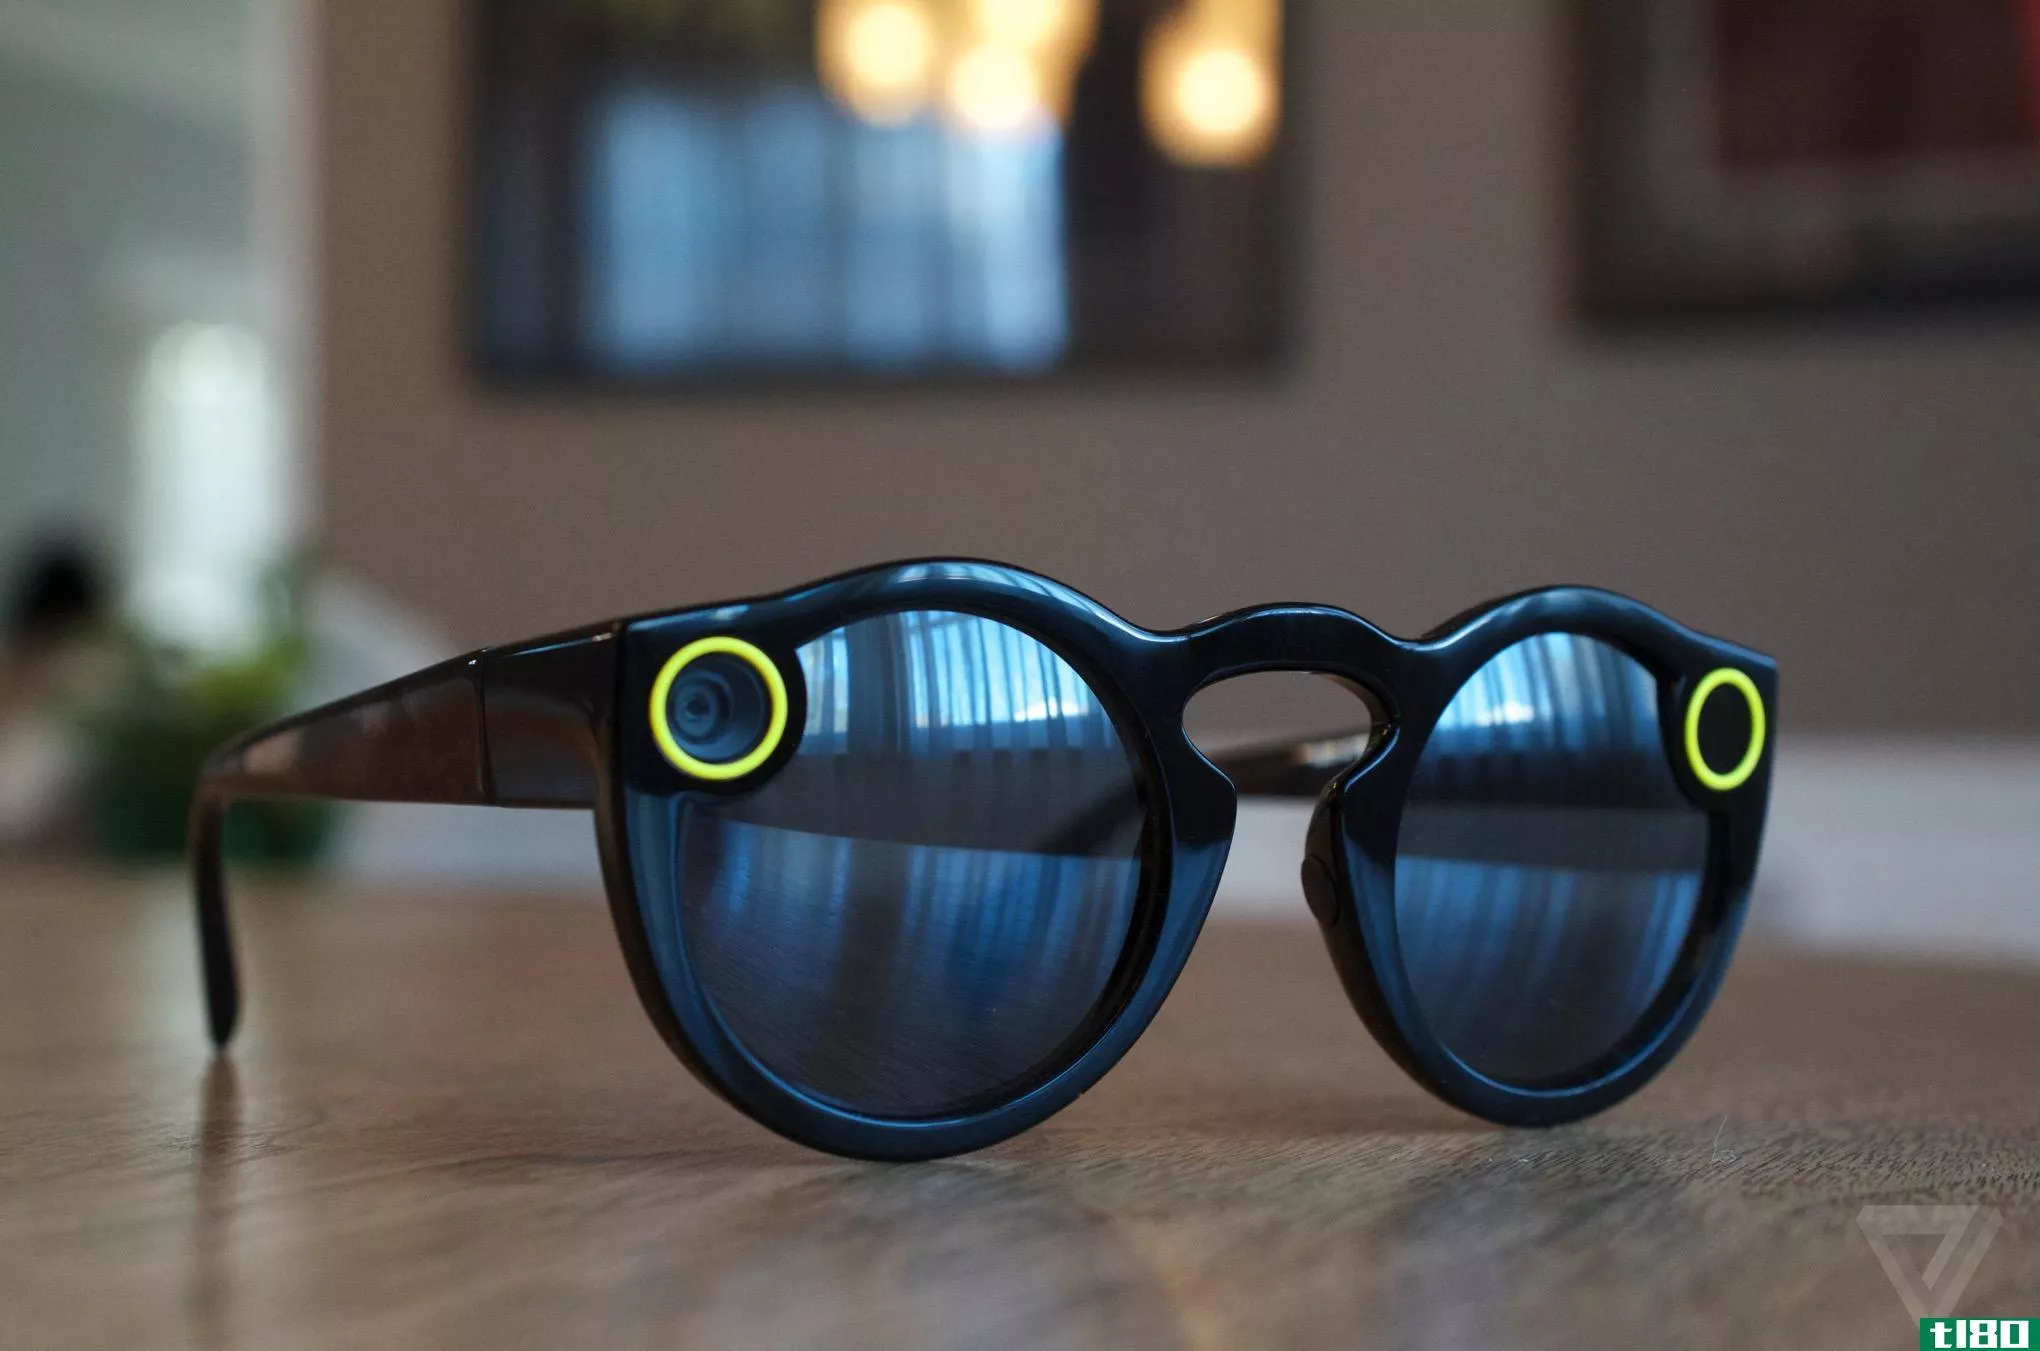 snap在未售出的眼镜上损失了近4000万美元